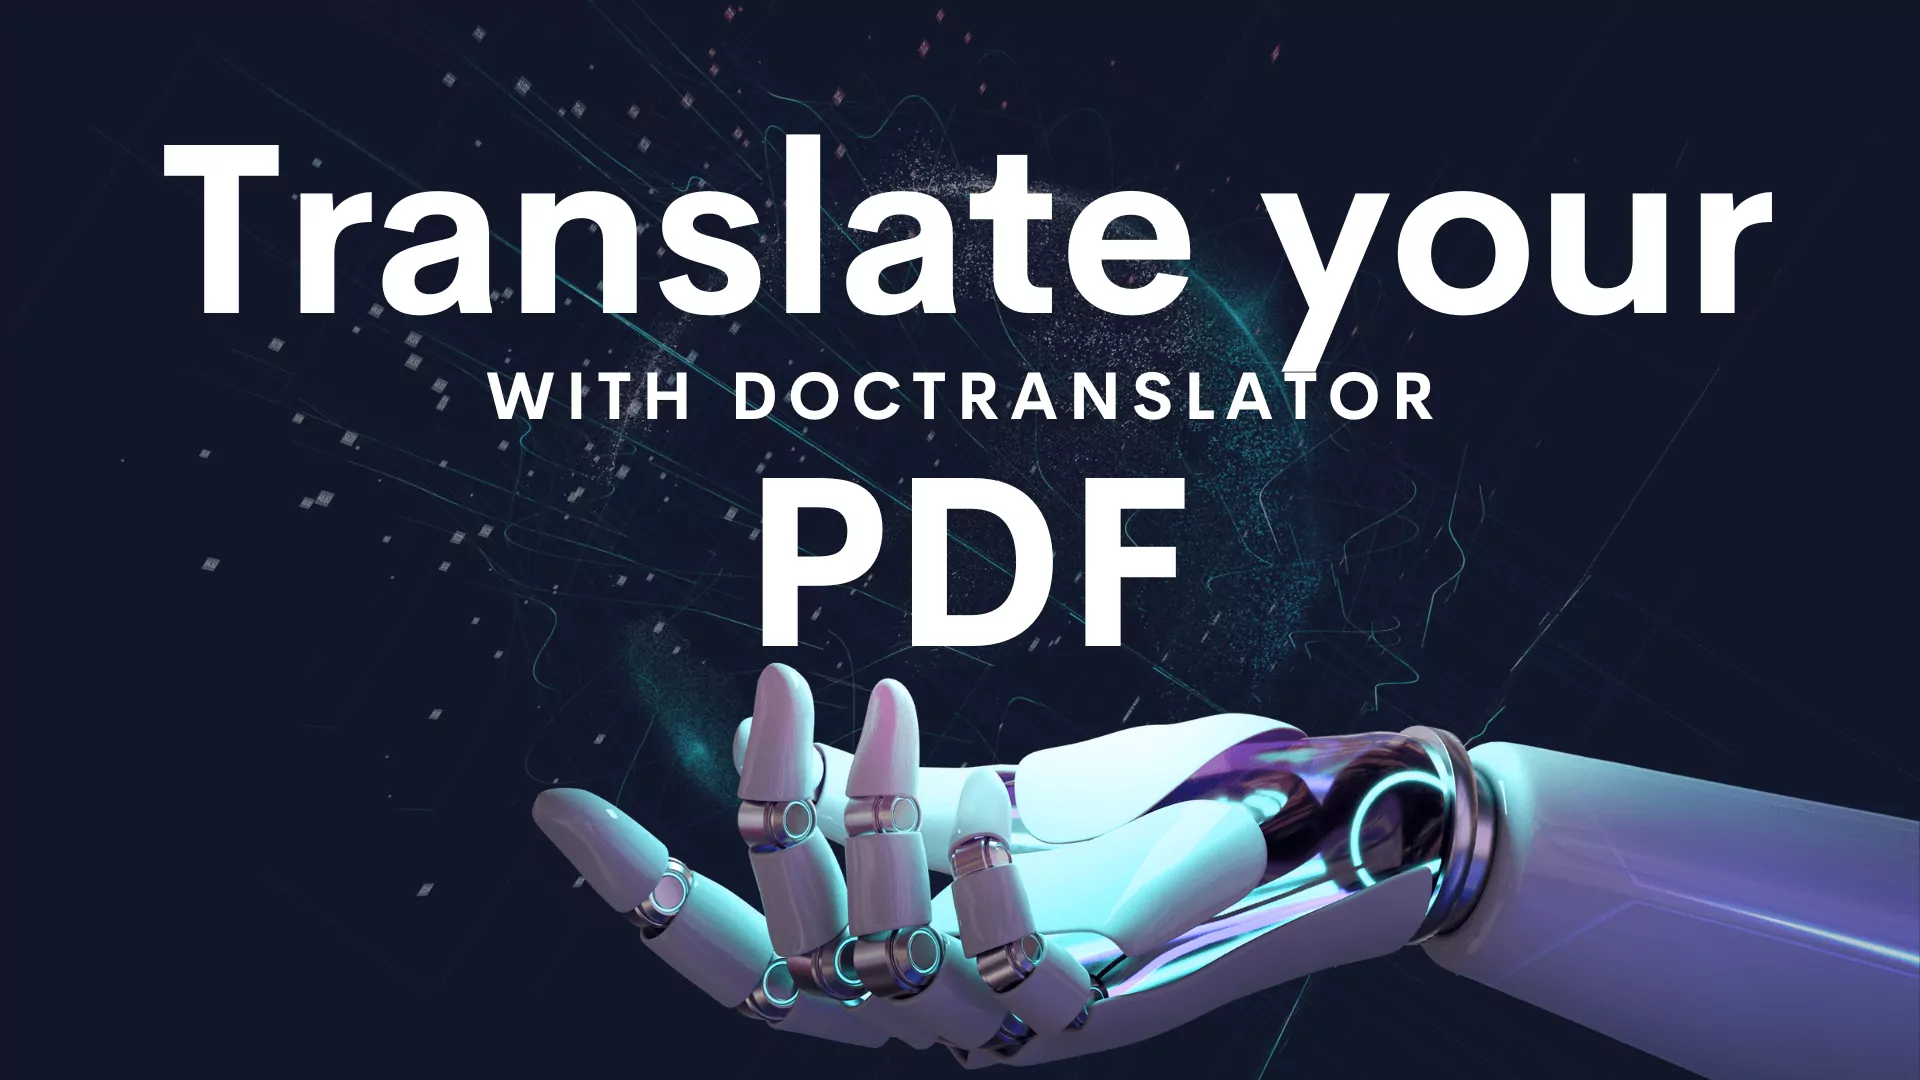 traduza seu PDF com doctranclator